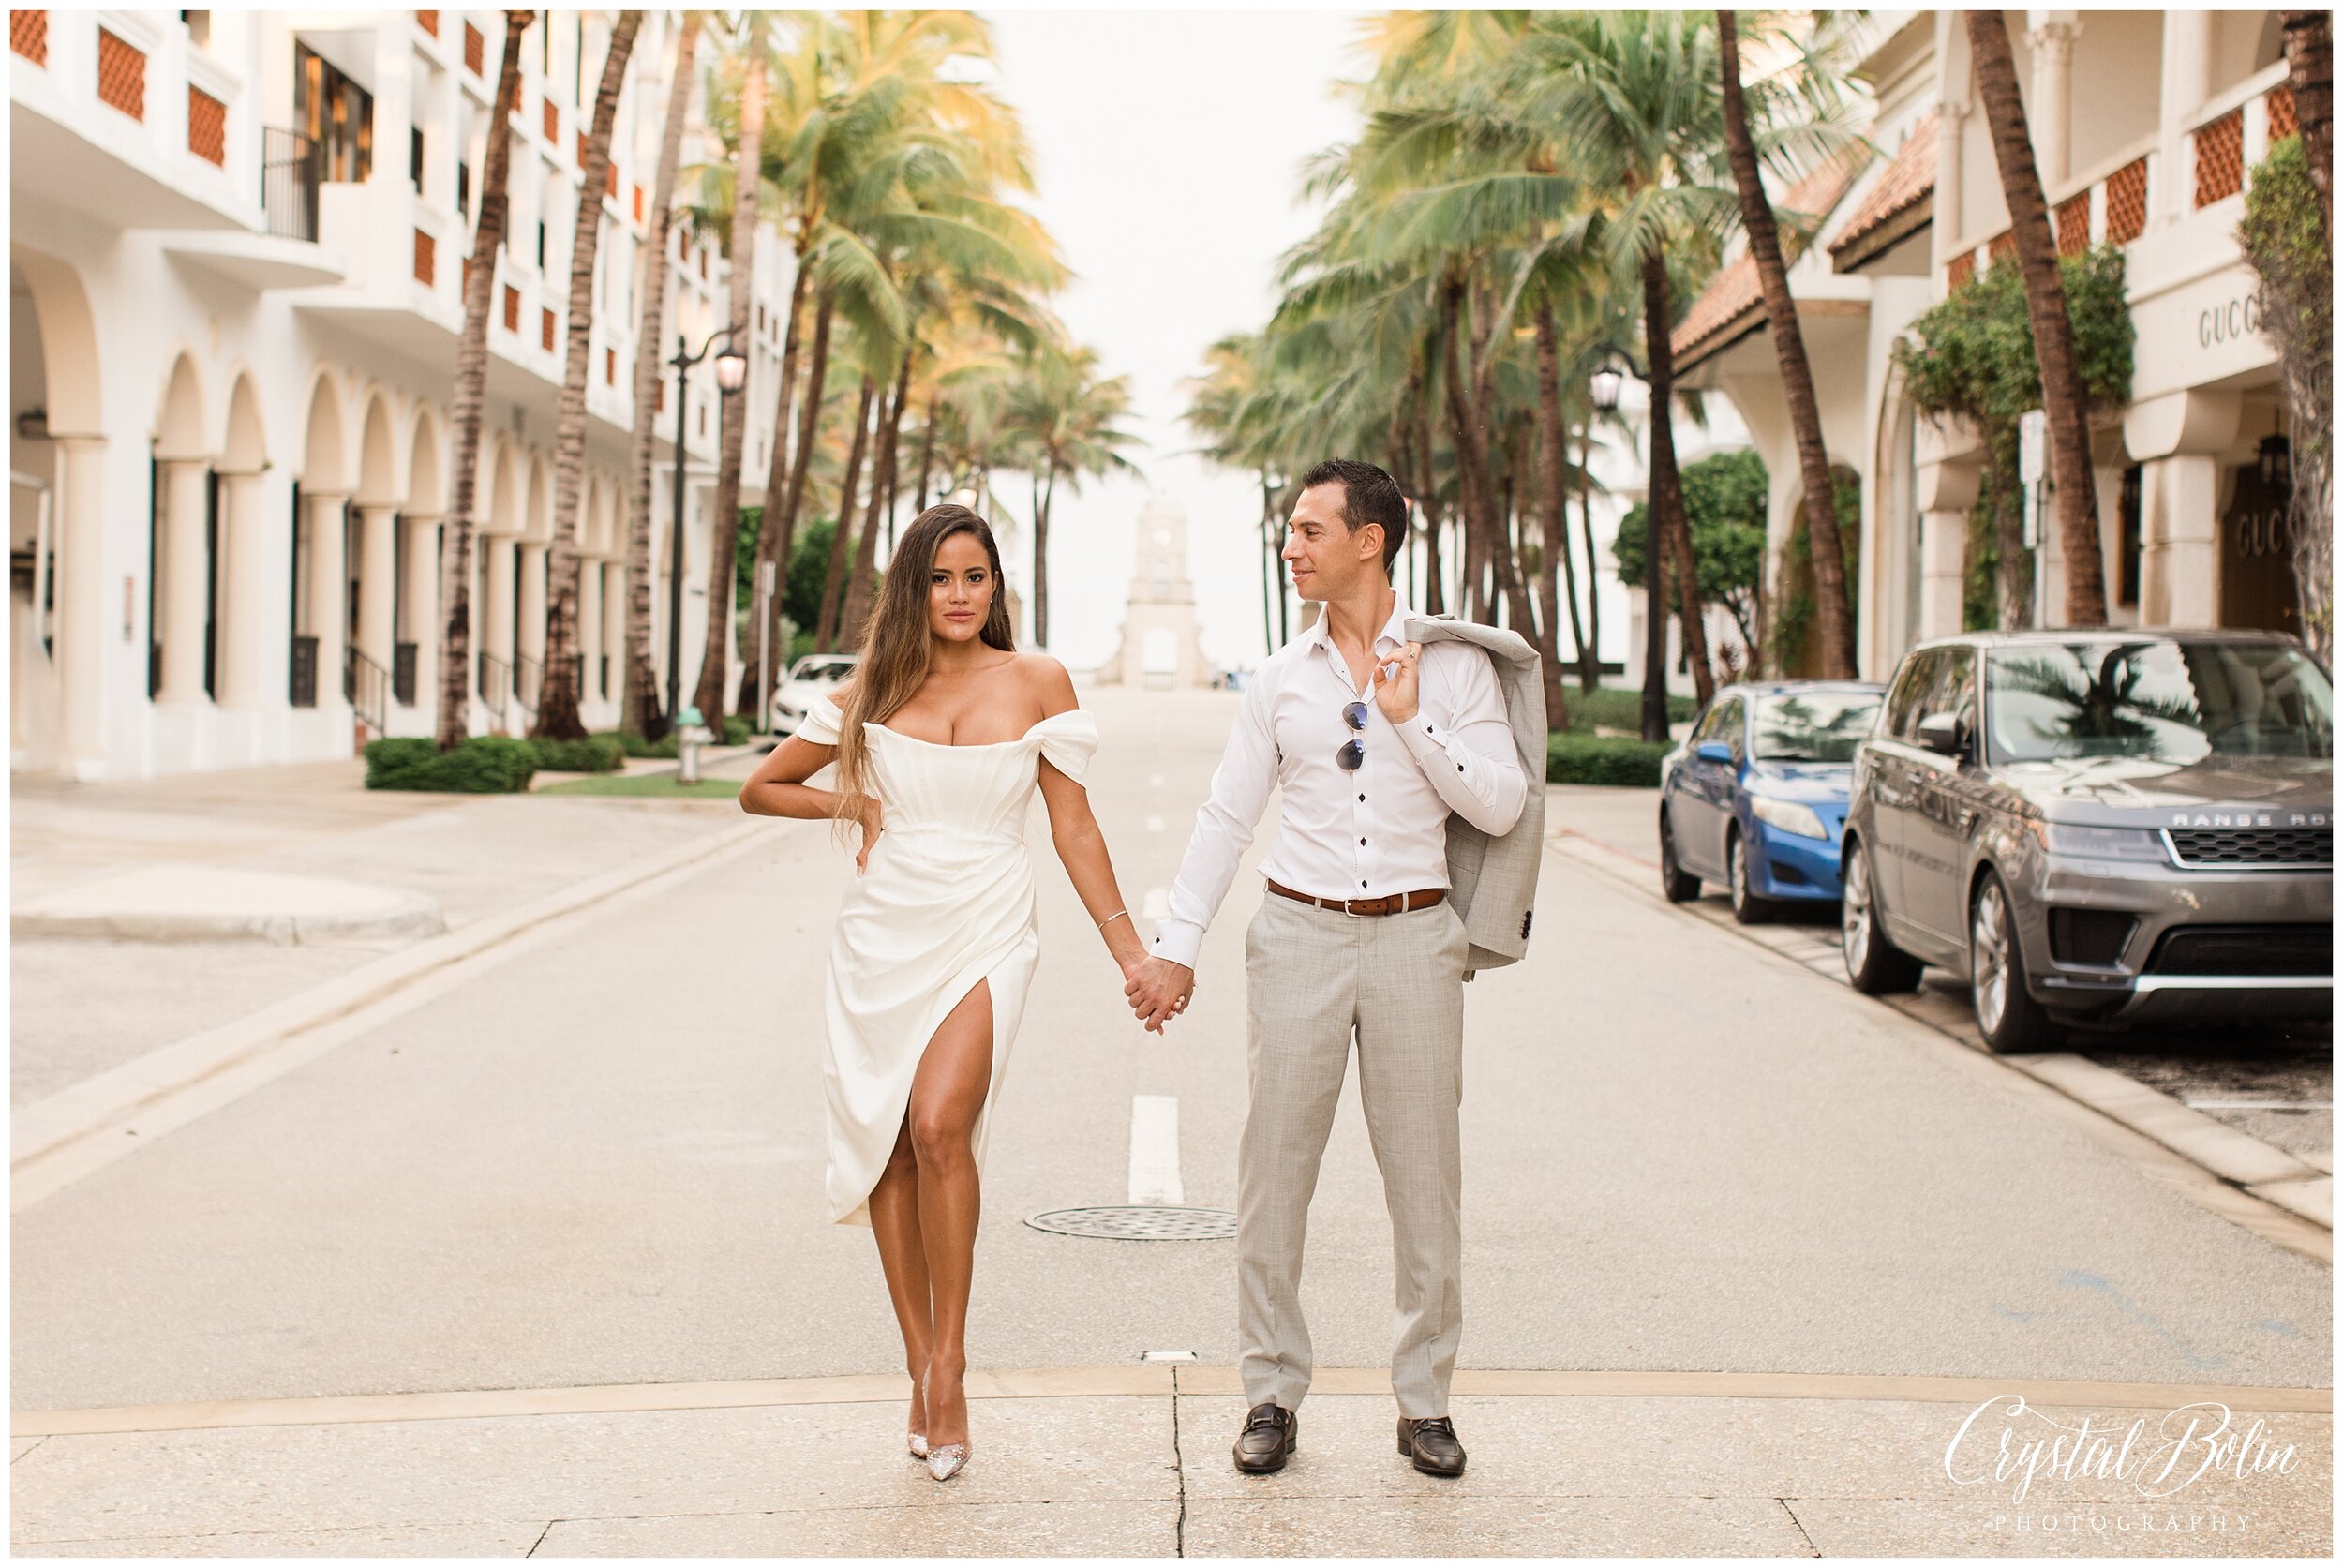 Vanessa & Andrew | 1st Anniversary Photos in Palm Beach, Florida